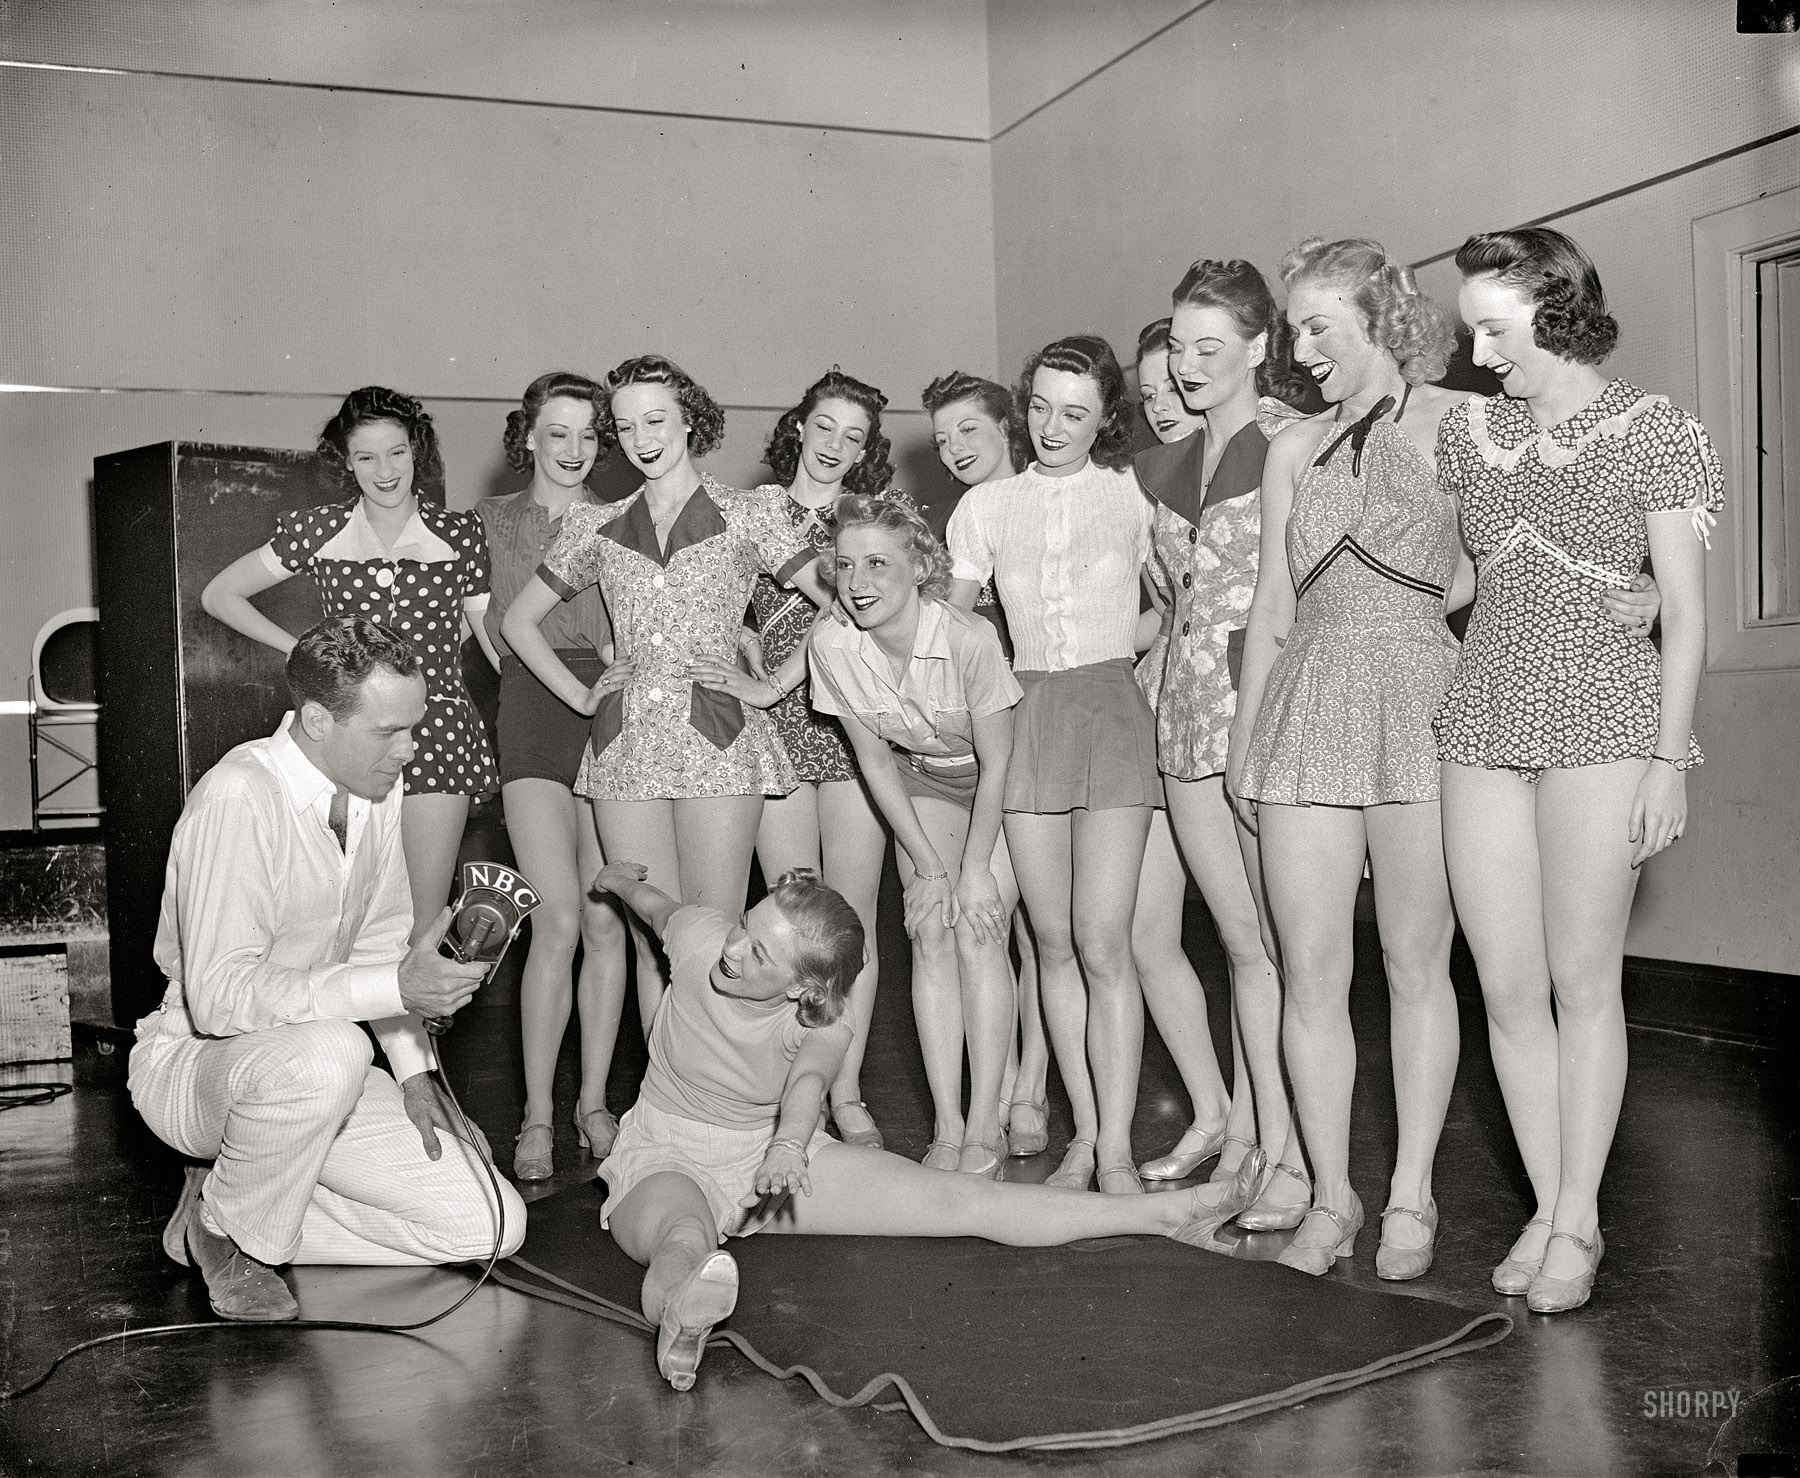 Washington, D.C., circa 1938. "Dancing class, WRC studio." Smile for the microphone, girls. Harris & Ewing Collection glass negative. View full size.